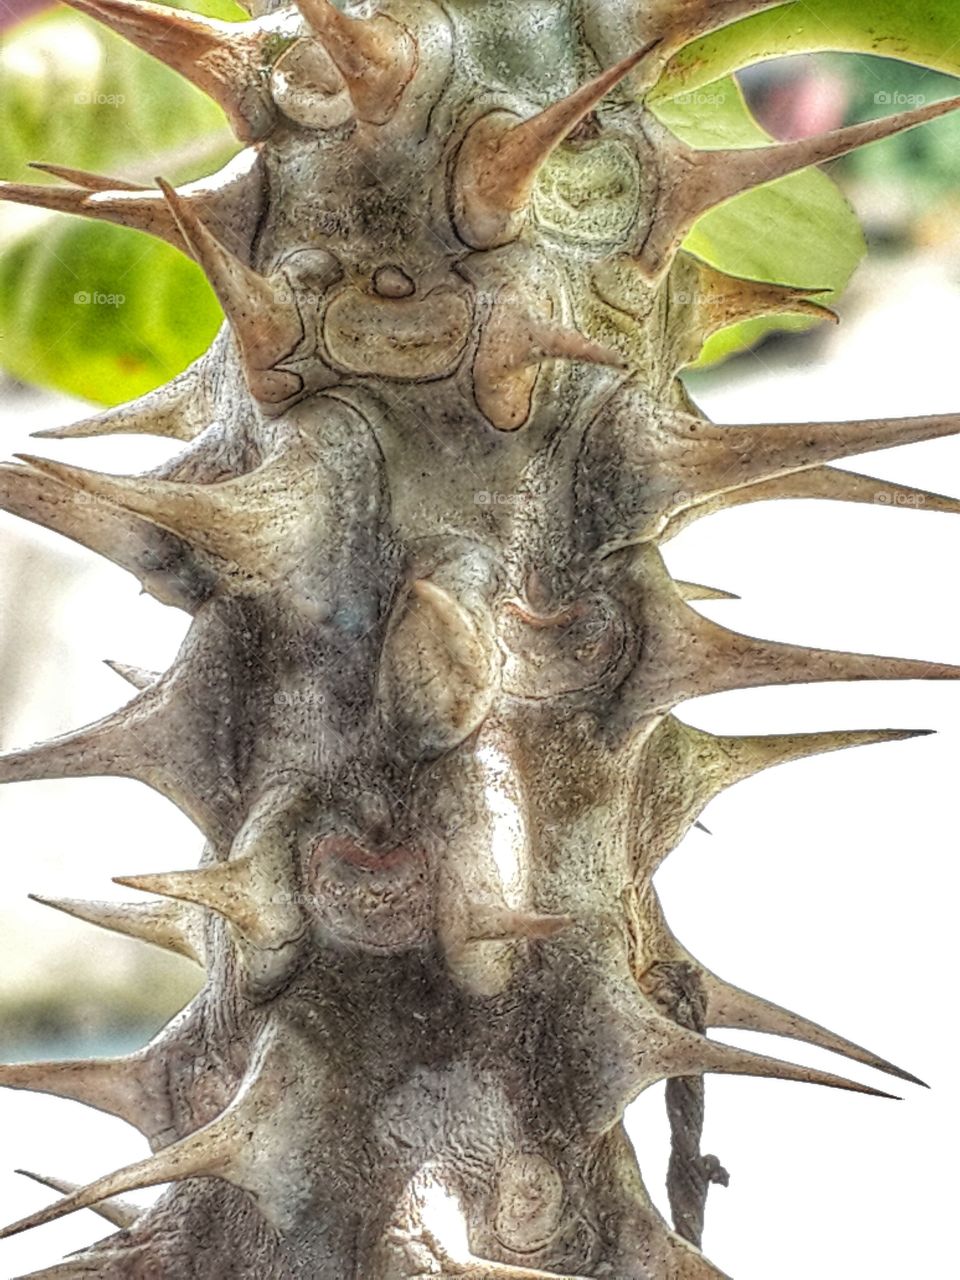 Spiky rod of an euphorhia plant